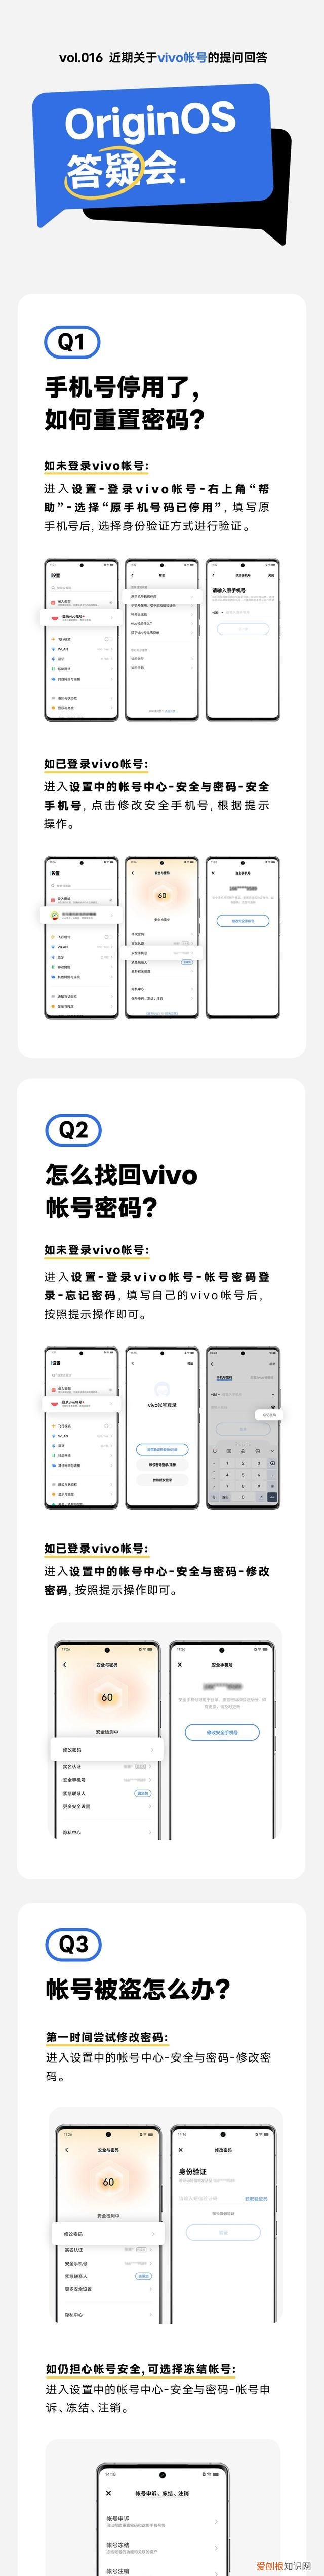 vivo账号是多少,vivooriginos正式版什么时候上架